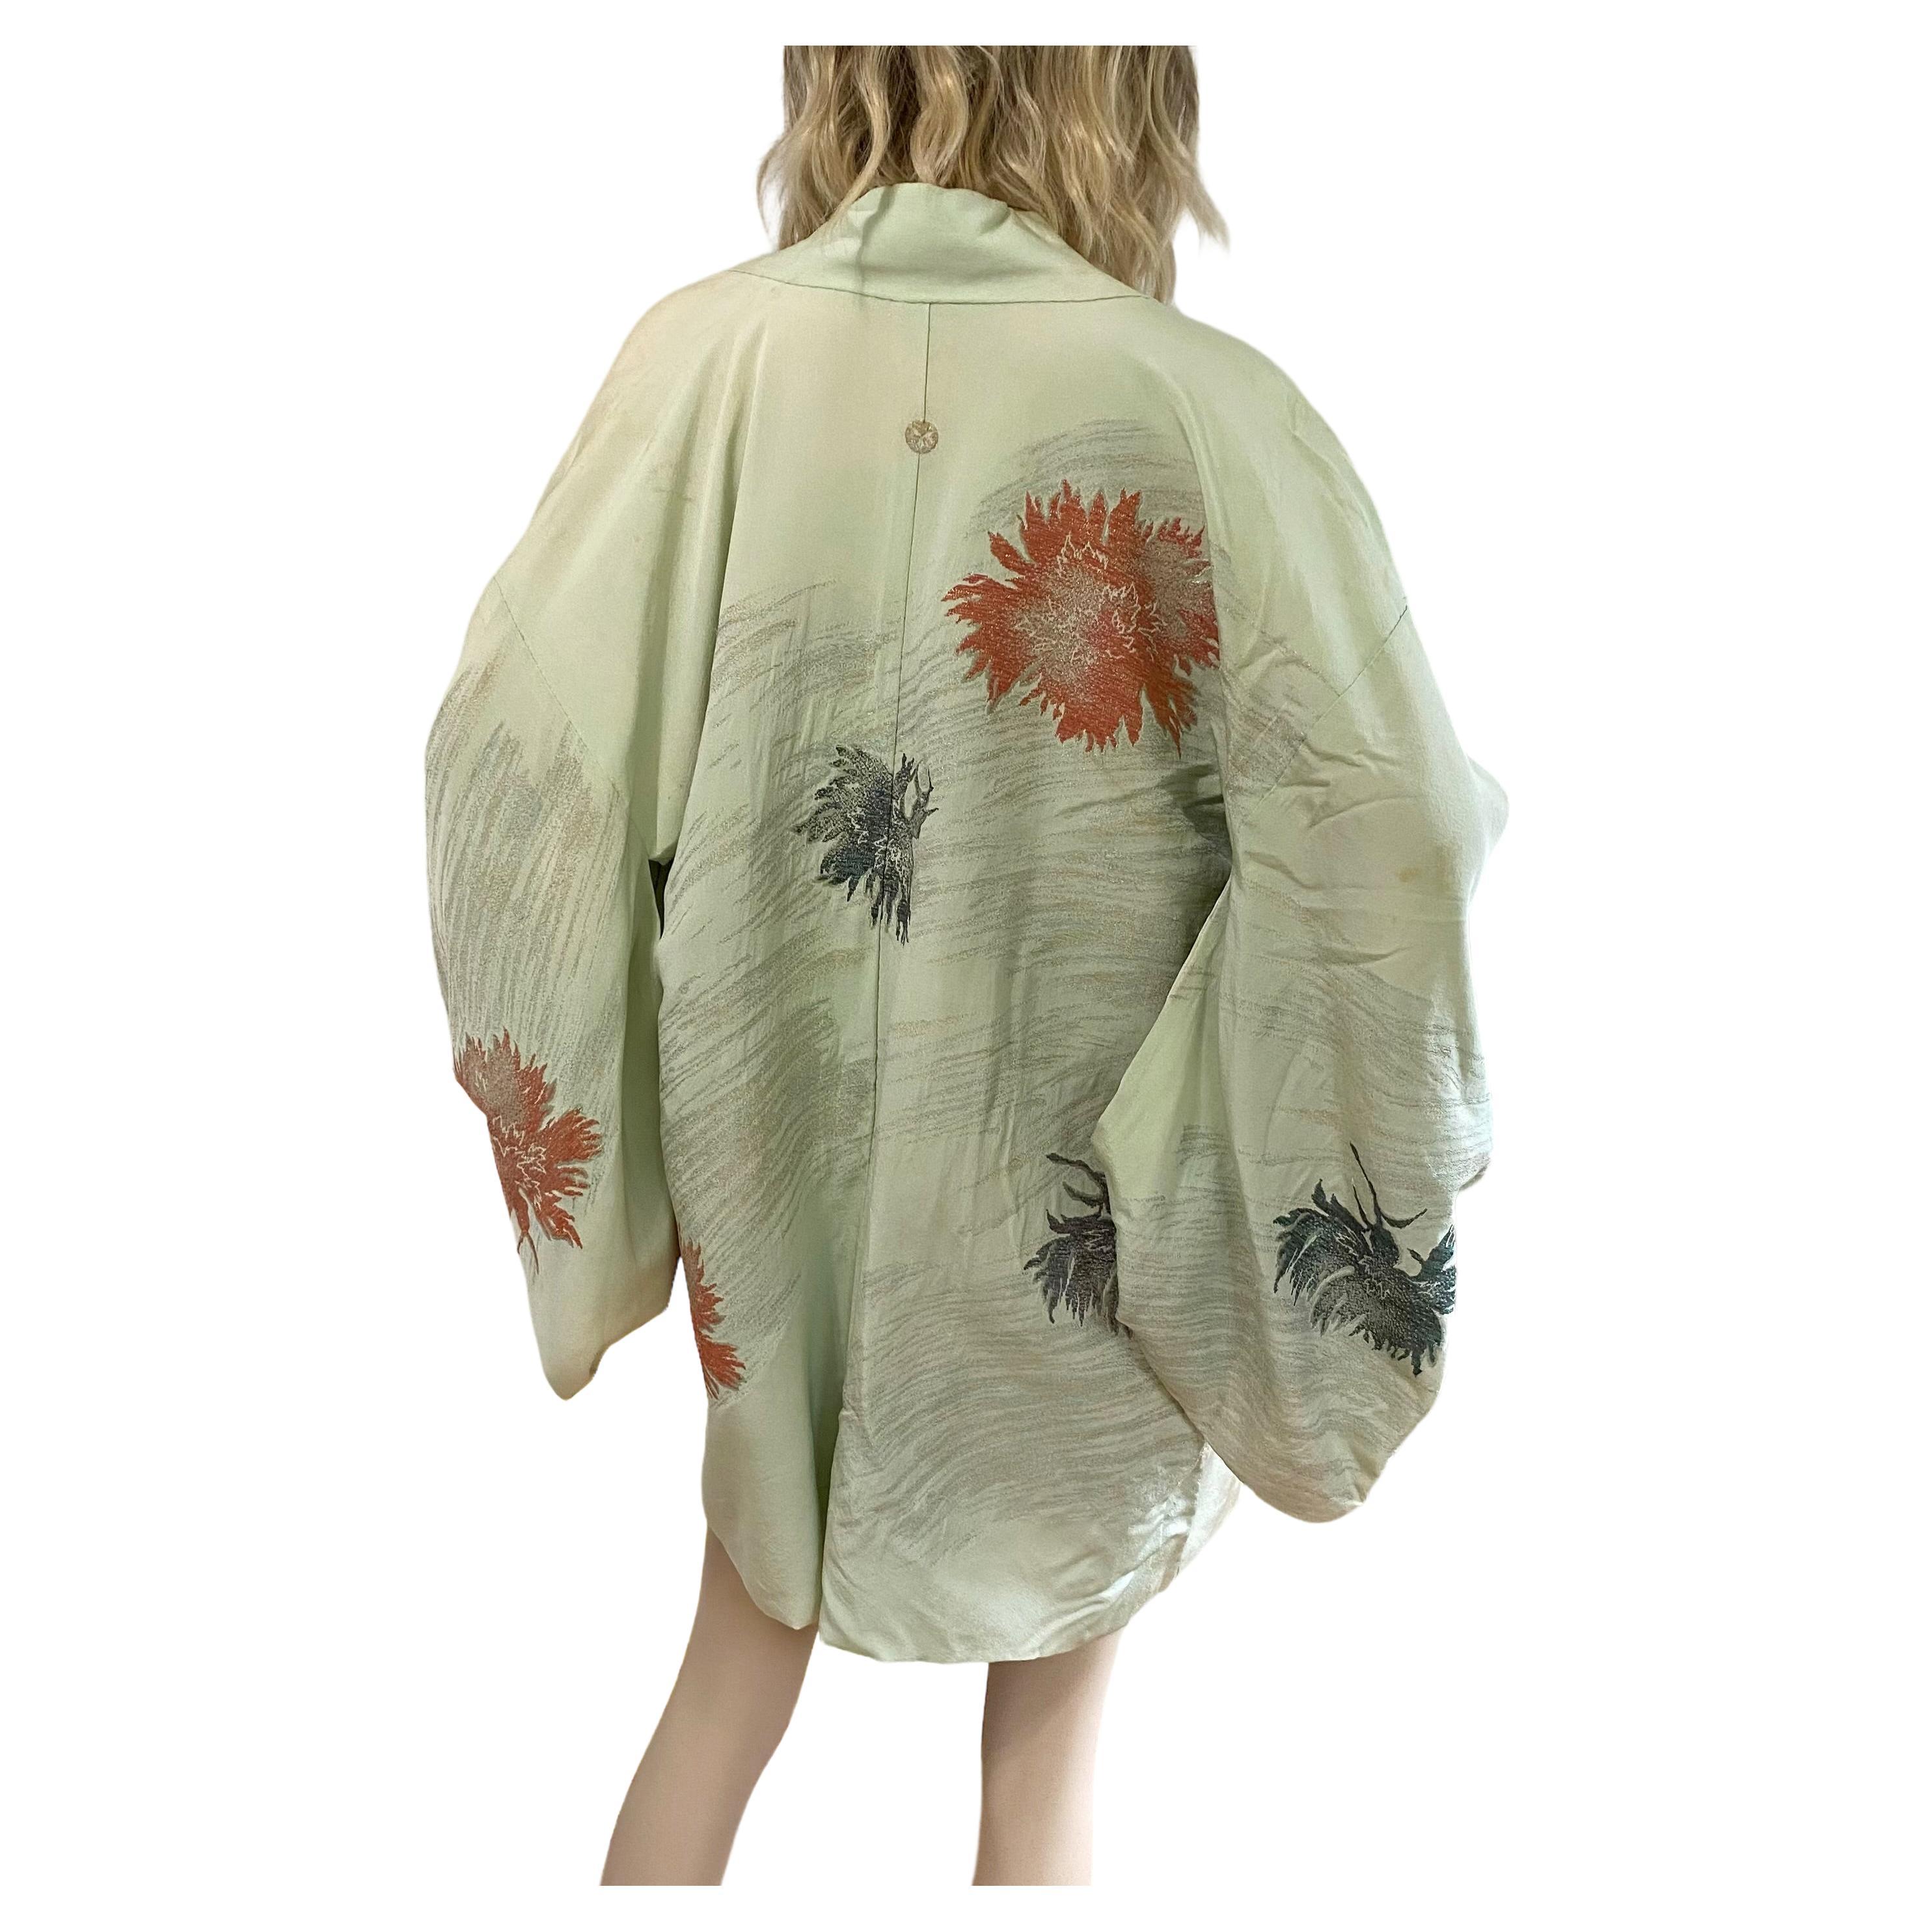 Pale Green Japanese Silk Brocade Kimono Cocoon Jacket vintage